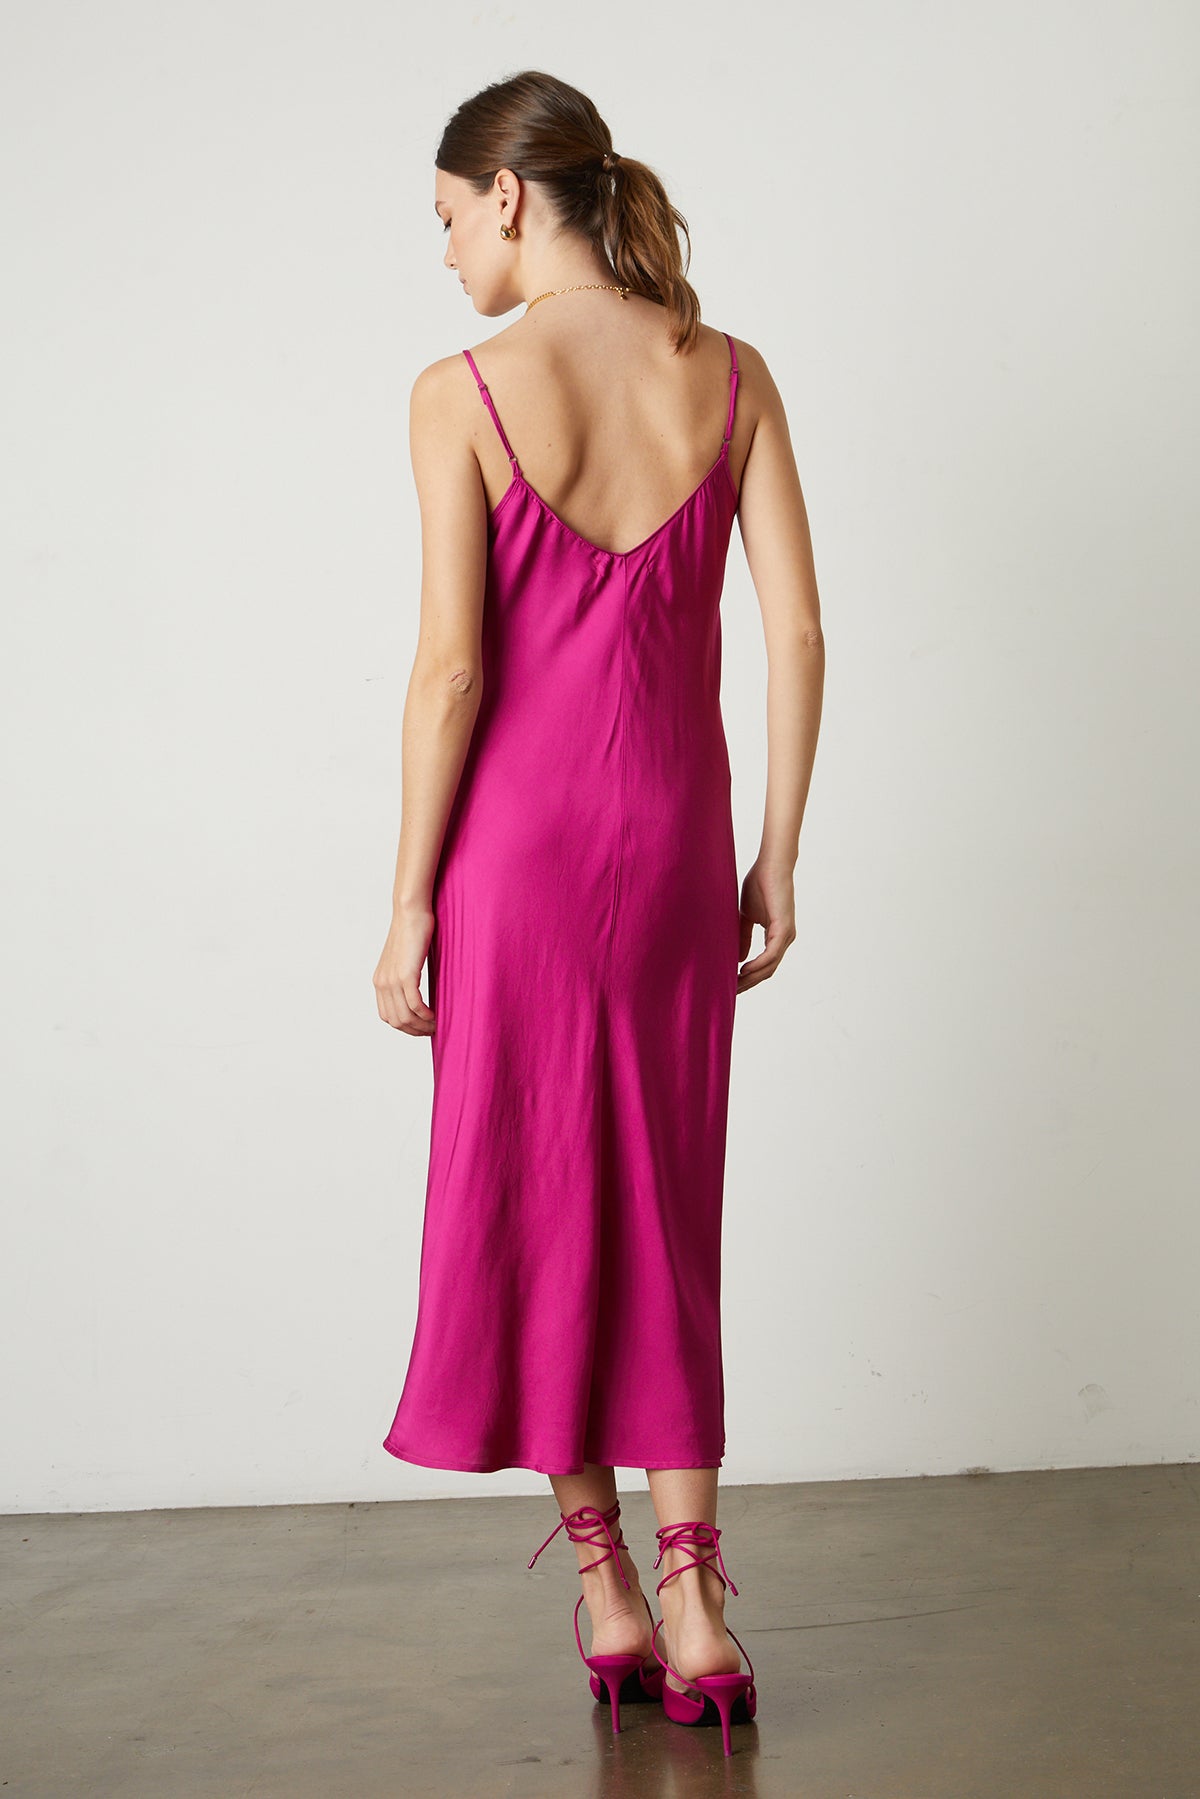 Poppy Satin Slip Dress in bright raspberry pink with matching heels back-25548639568065